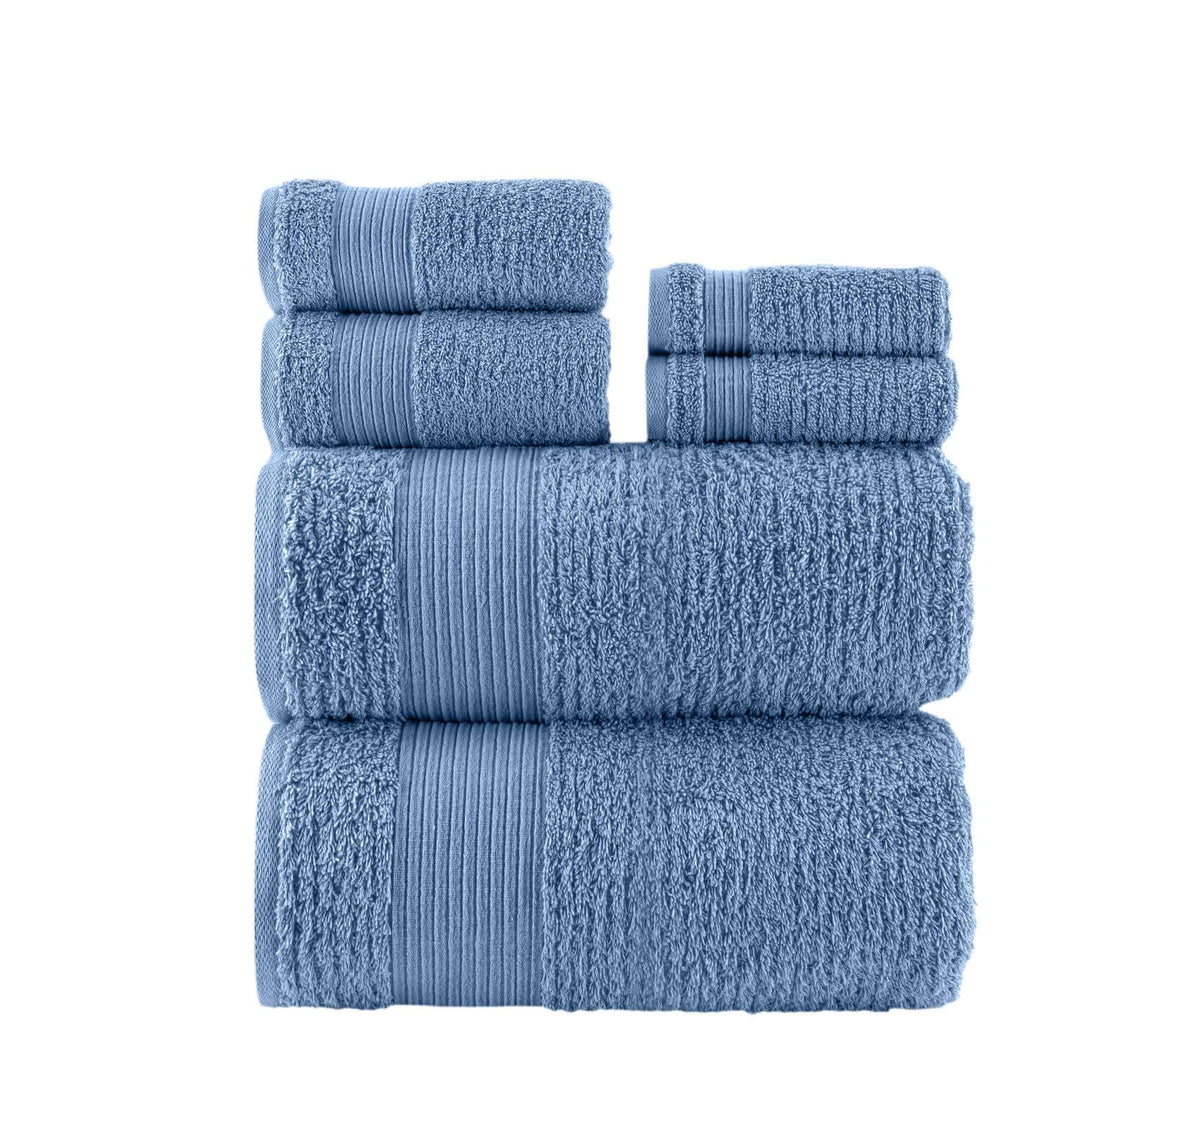 Chic Home Jacquard Turkish Cotton Bath Towel 3 Piece Set in Blue